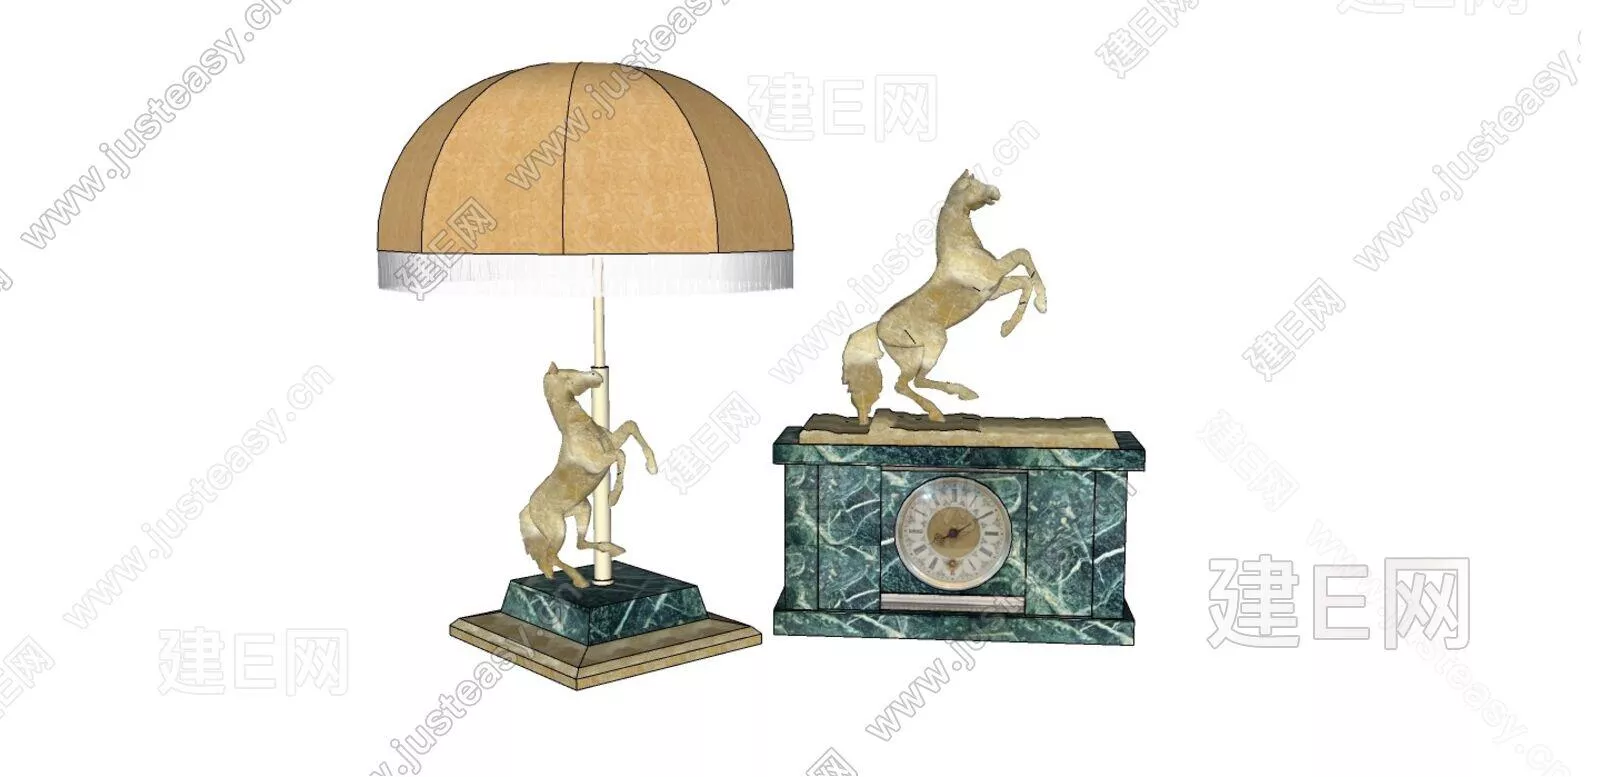 EUROPE TABLE LAMP - SKETCHUP 3D MODEL - ENSCAPE - 113131918